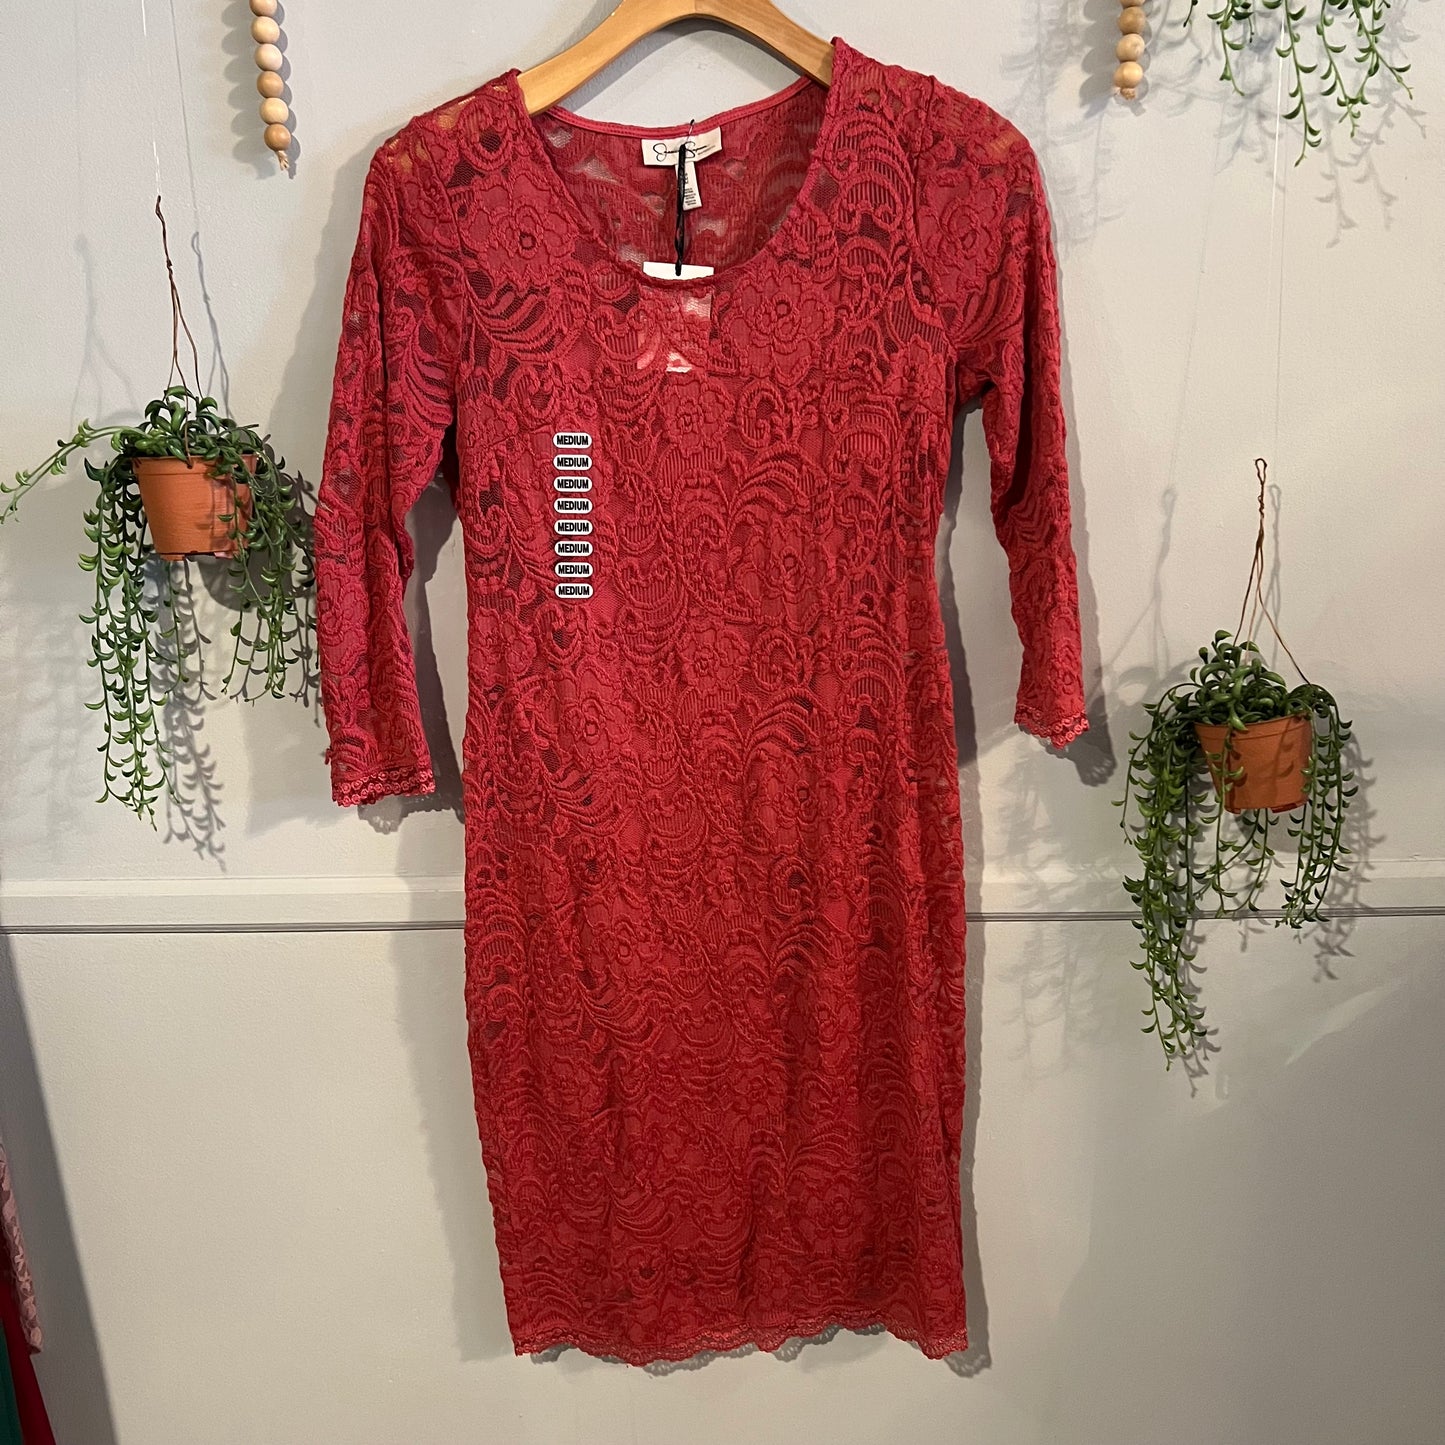 Lace overlay 3/4 sleeve midi dress, Coral